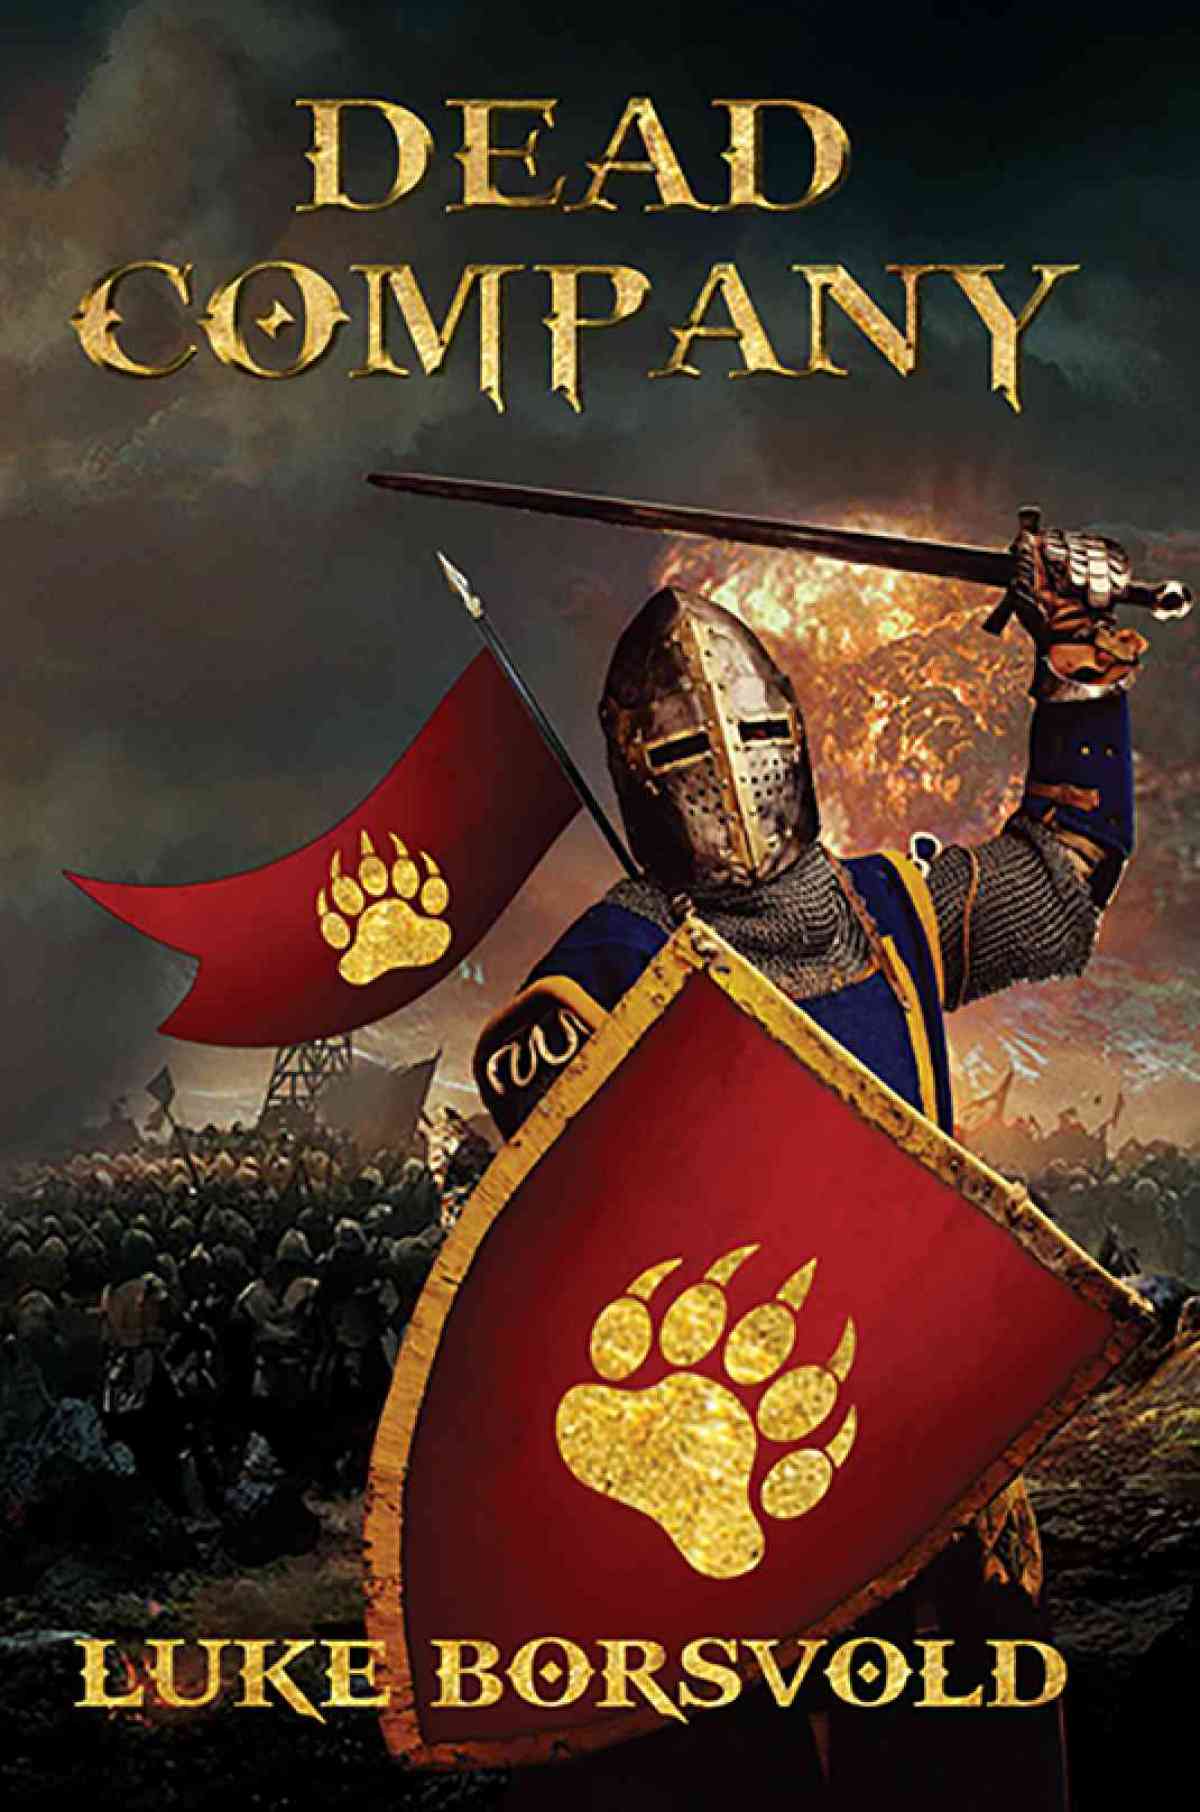 The book cover of 'Dead Company'